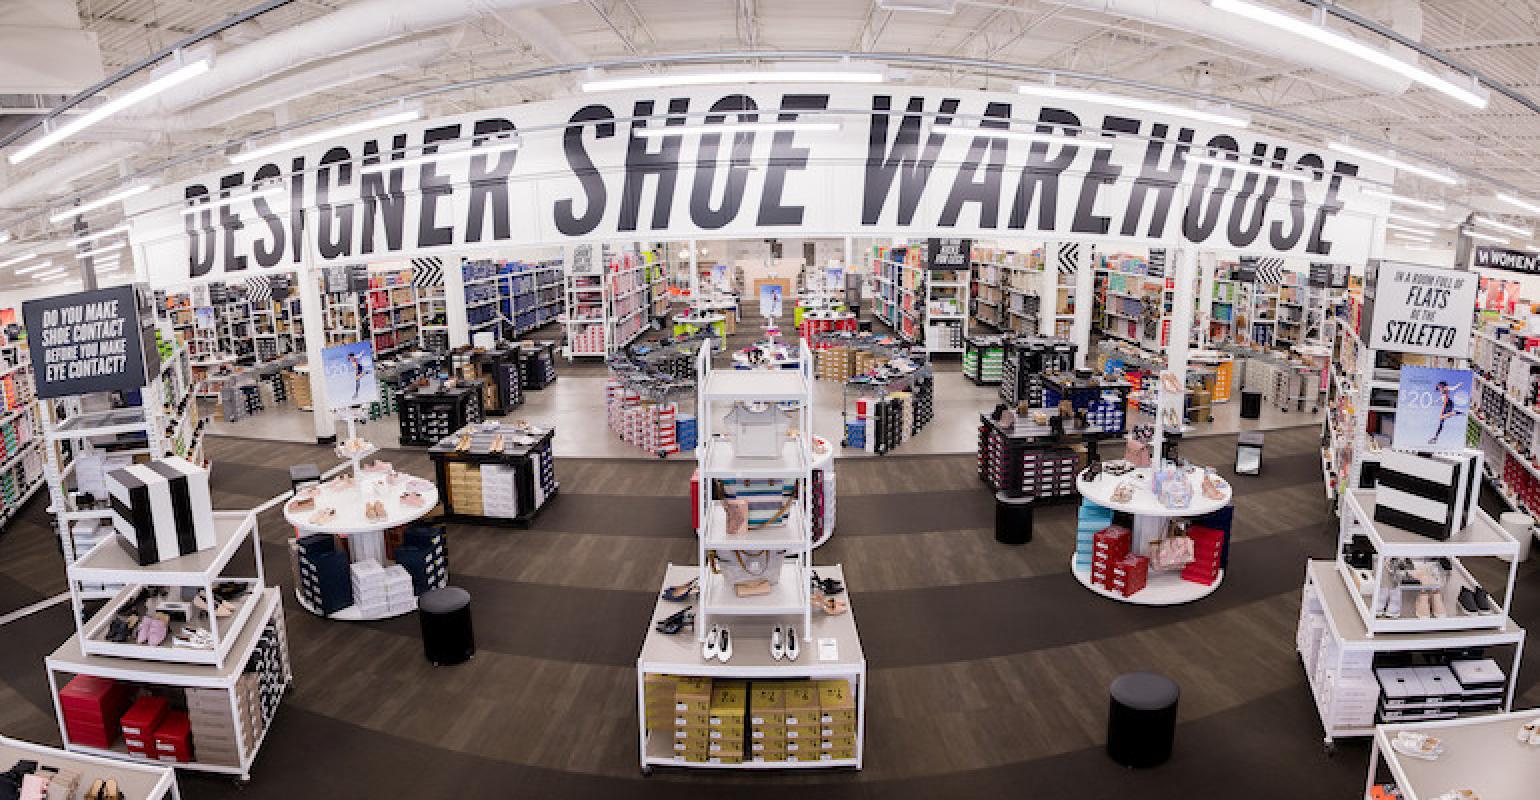 fashion shoe warehouse online